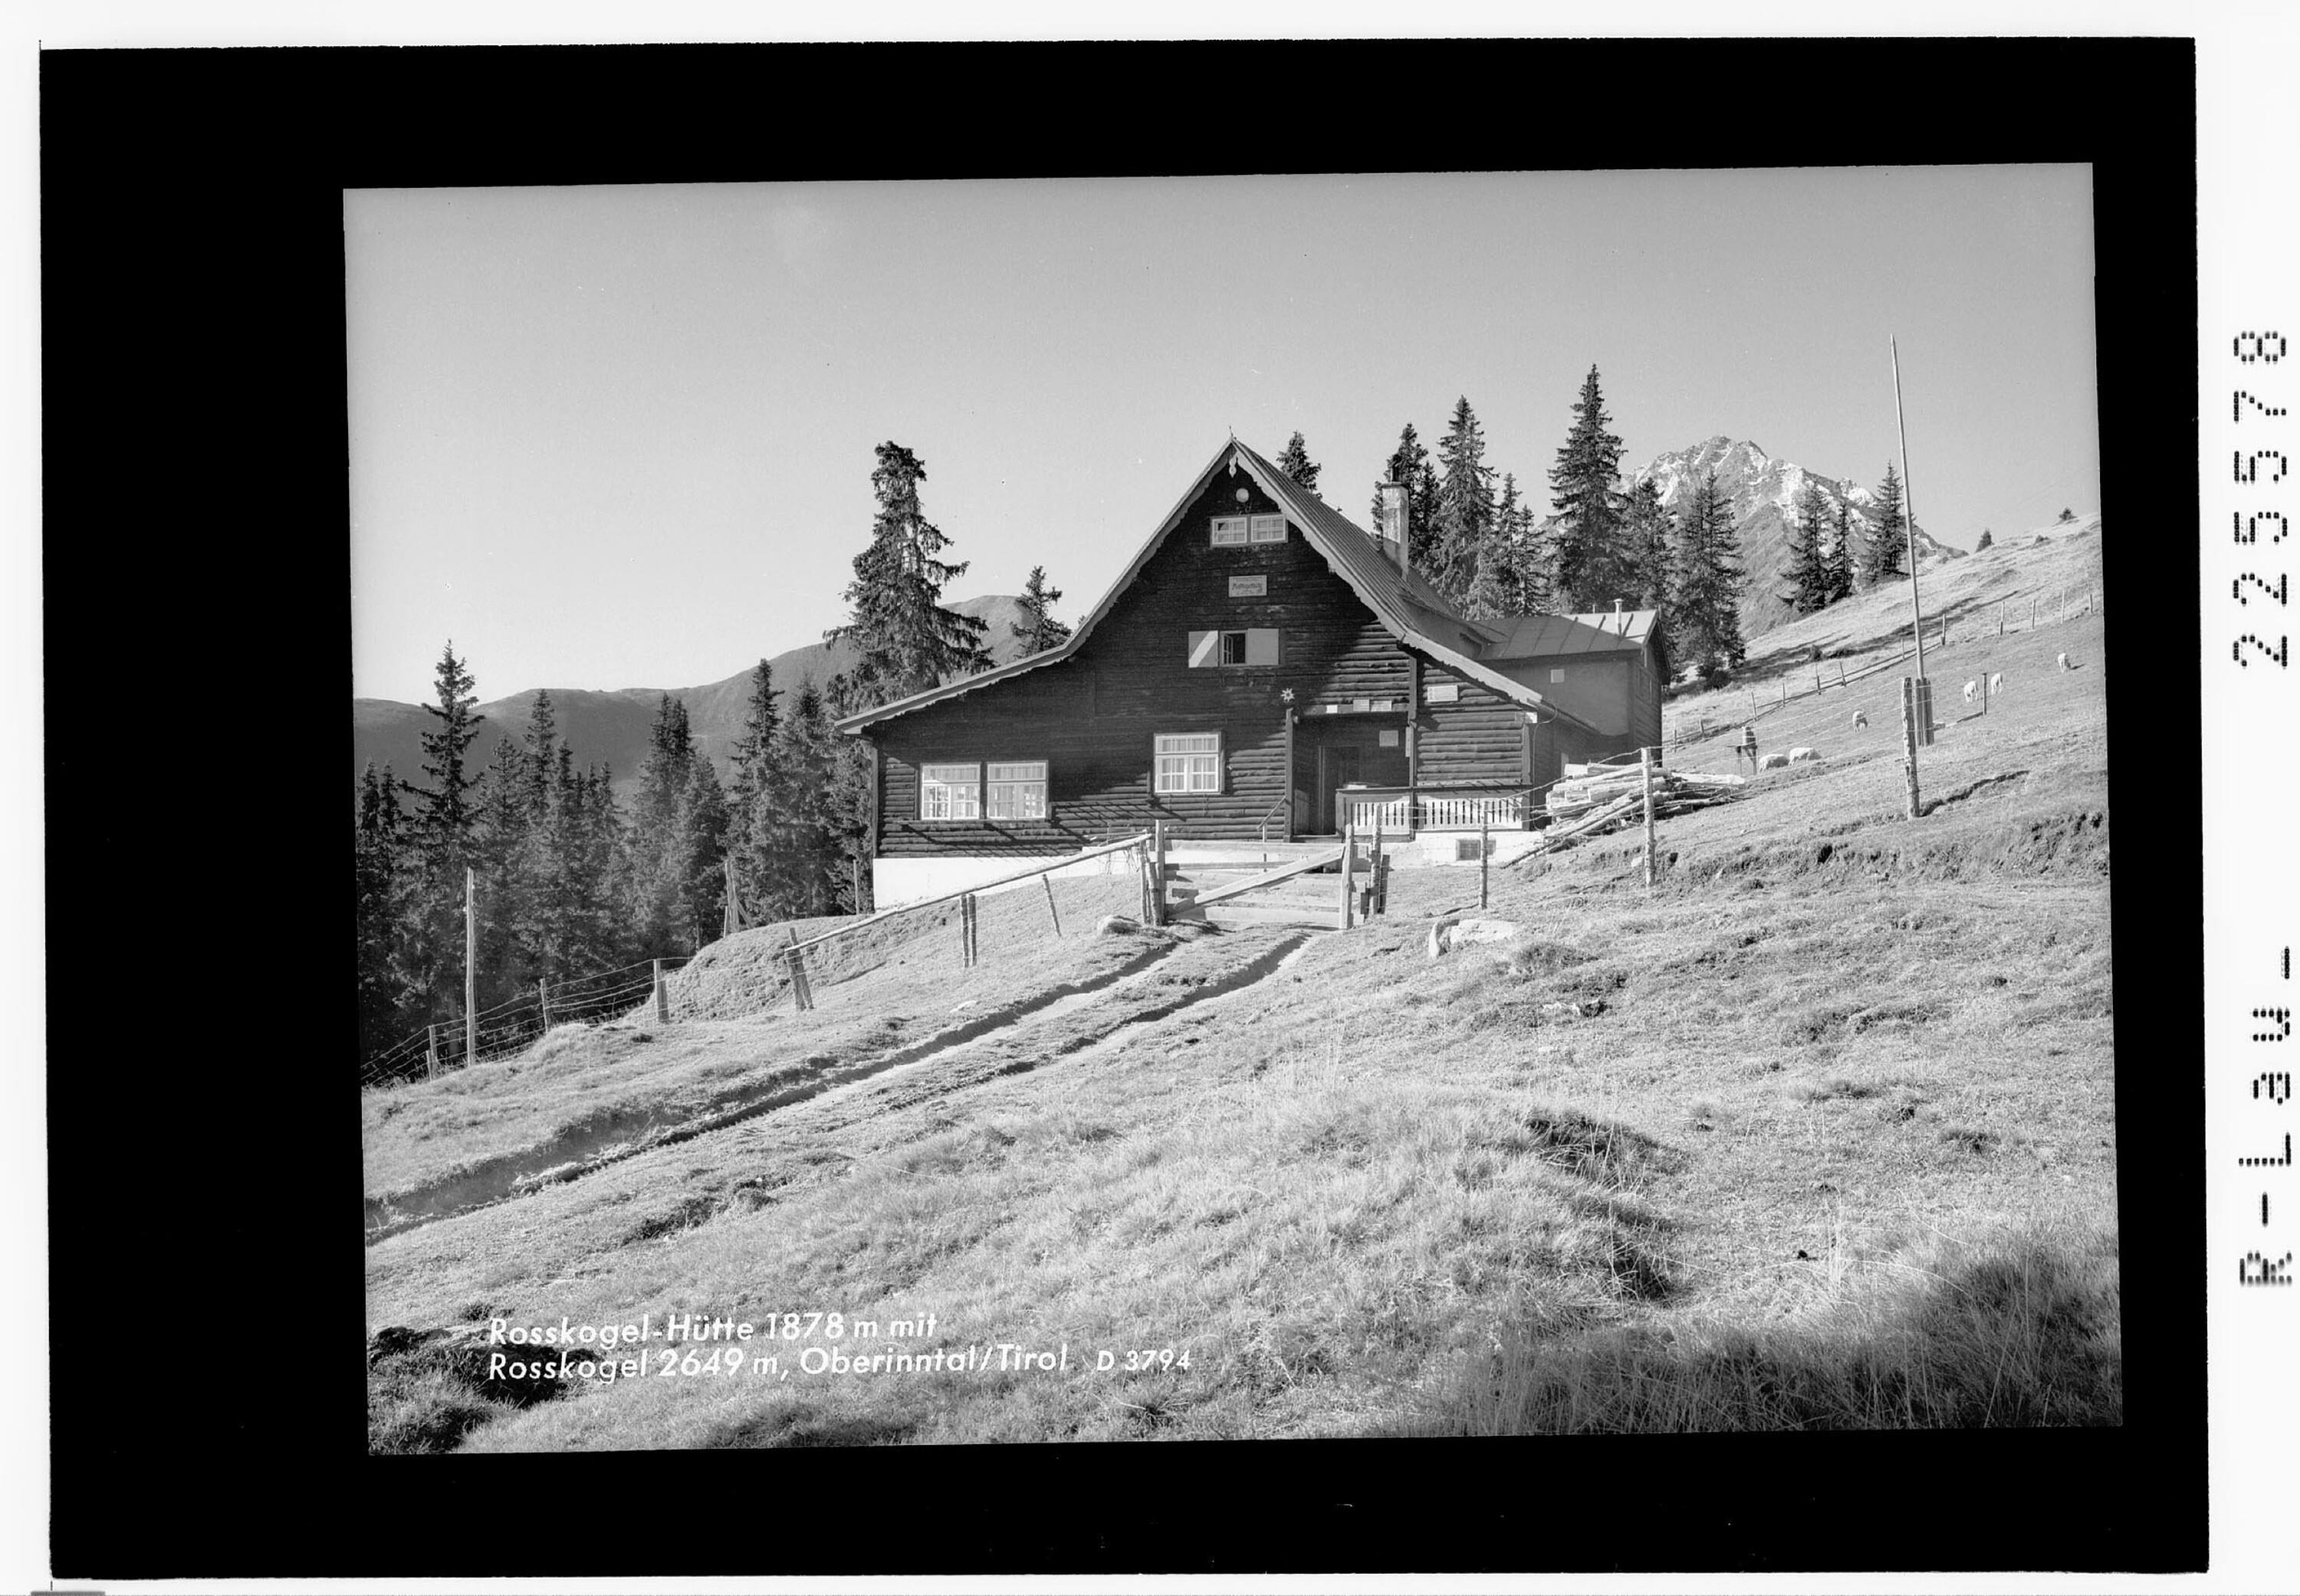 Rosskogel Hütte 1878 m mit Rosskogel 2649 m / Oberinntal / Tirol></div>


    <hr>
    <div class=